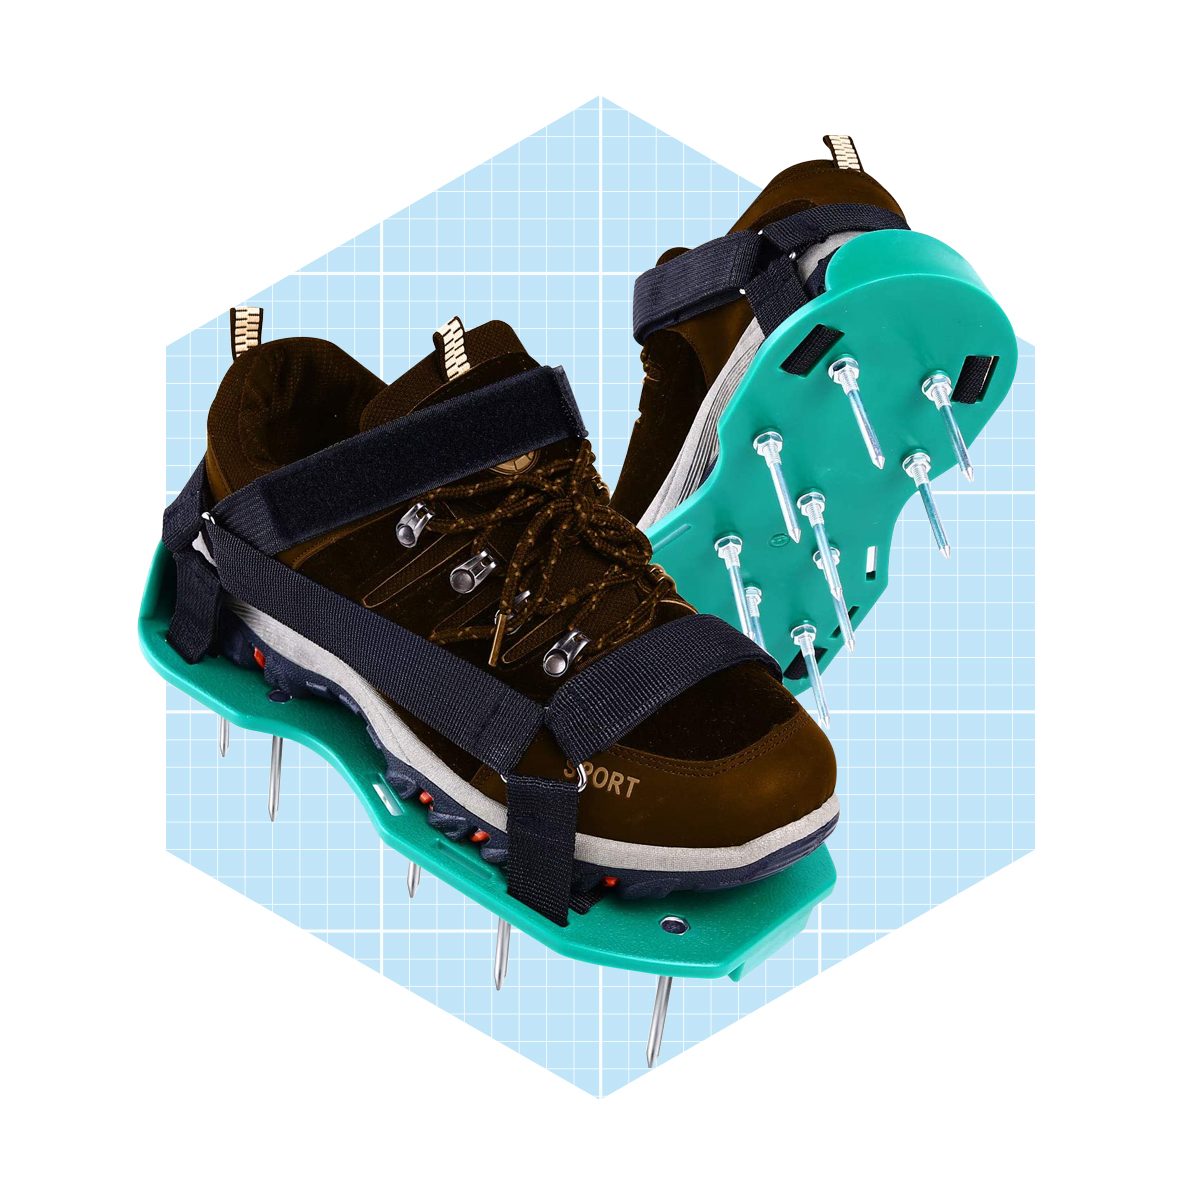 Ohuhu Lawn Aerator Shoes With Stainless Steel Shovel Ecomm Amazon.com